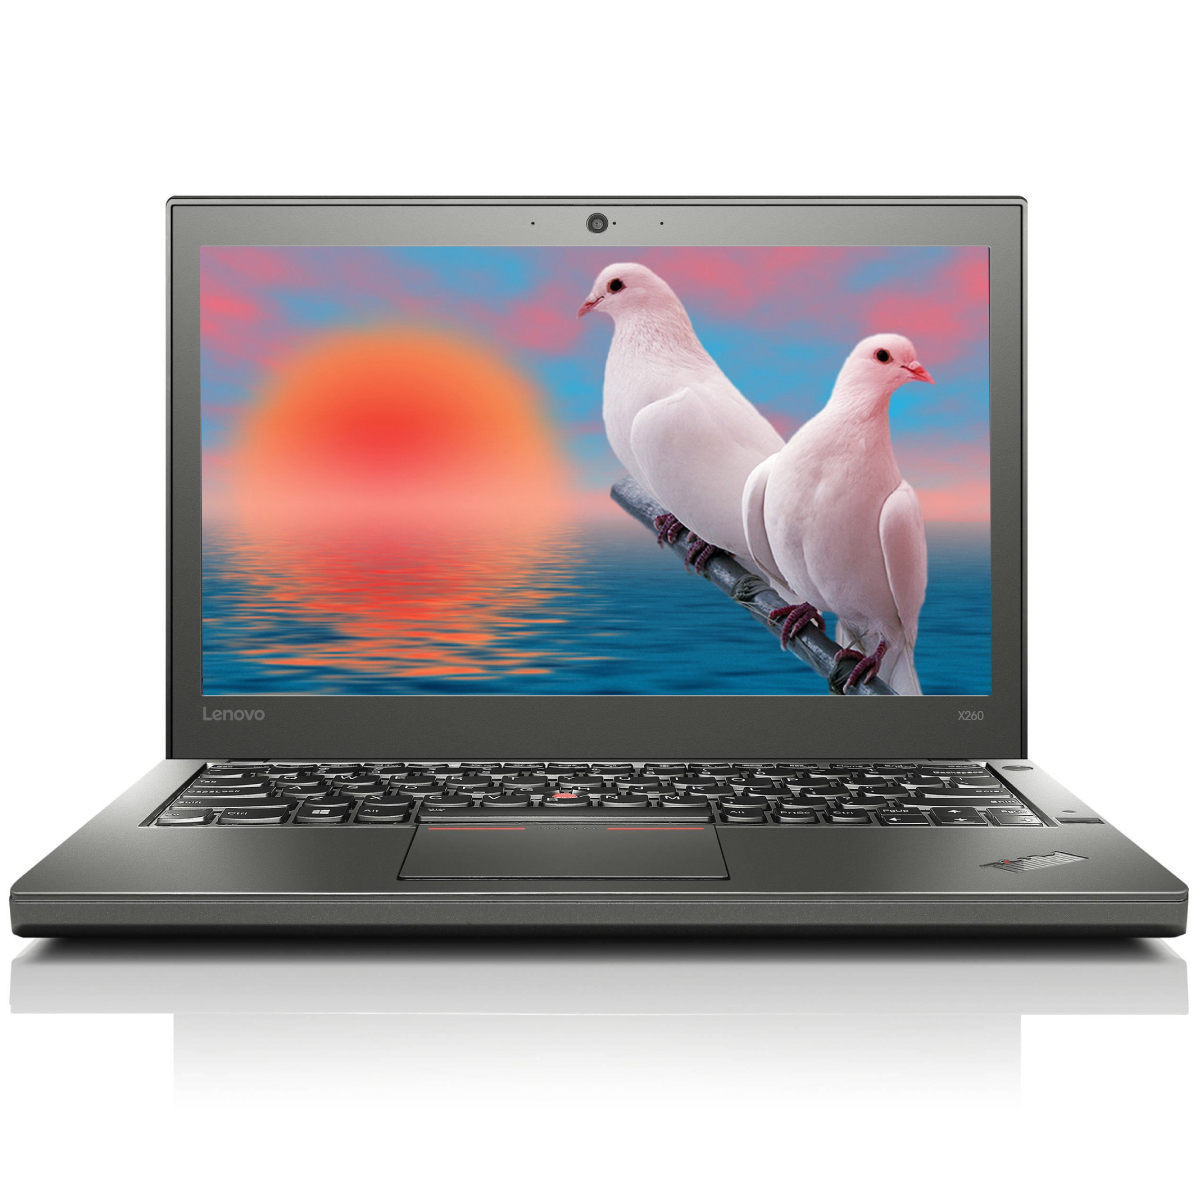 Lenovo ThinkPad X260 12.5 1366x768 i5-6200U 8GB 256SSD WIN10Pro RENEW AB2793 (ABC051152793)